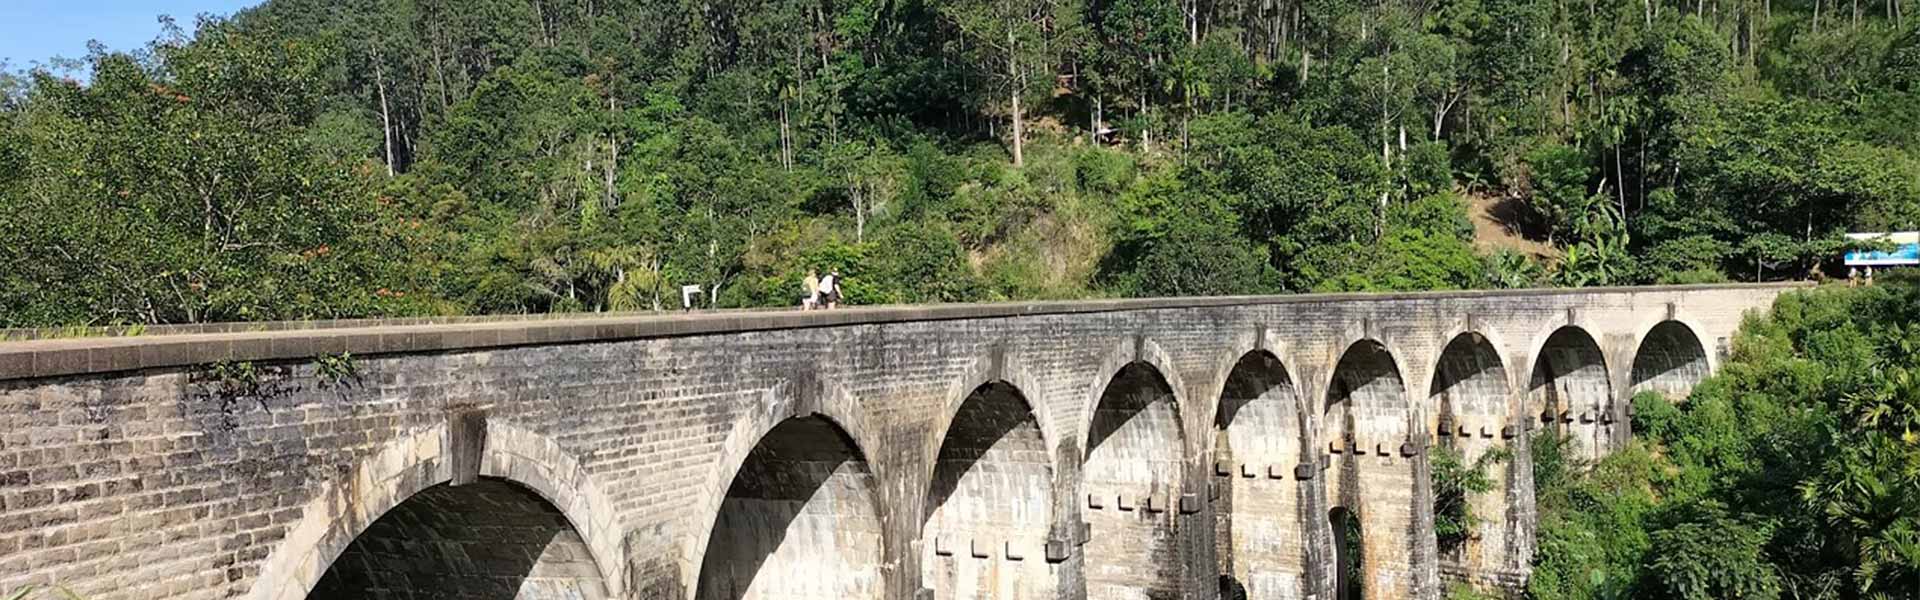 Nine Arch bridge located in Demodara Sri Lanka